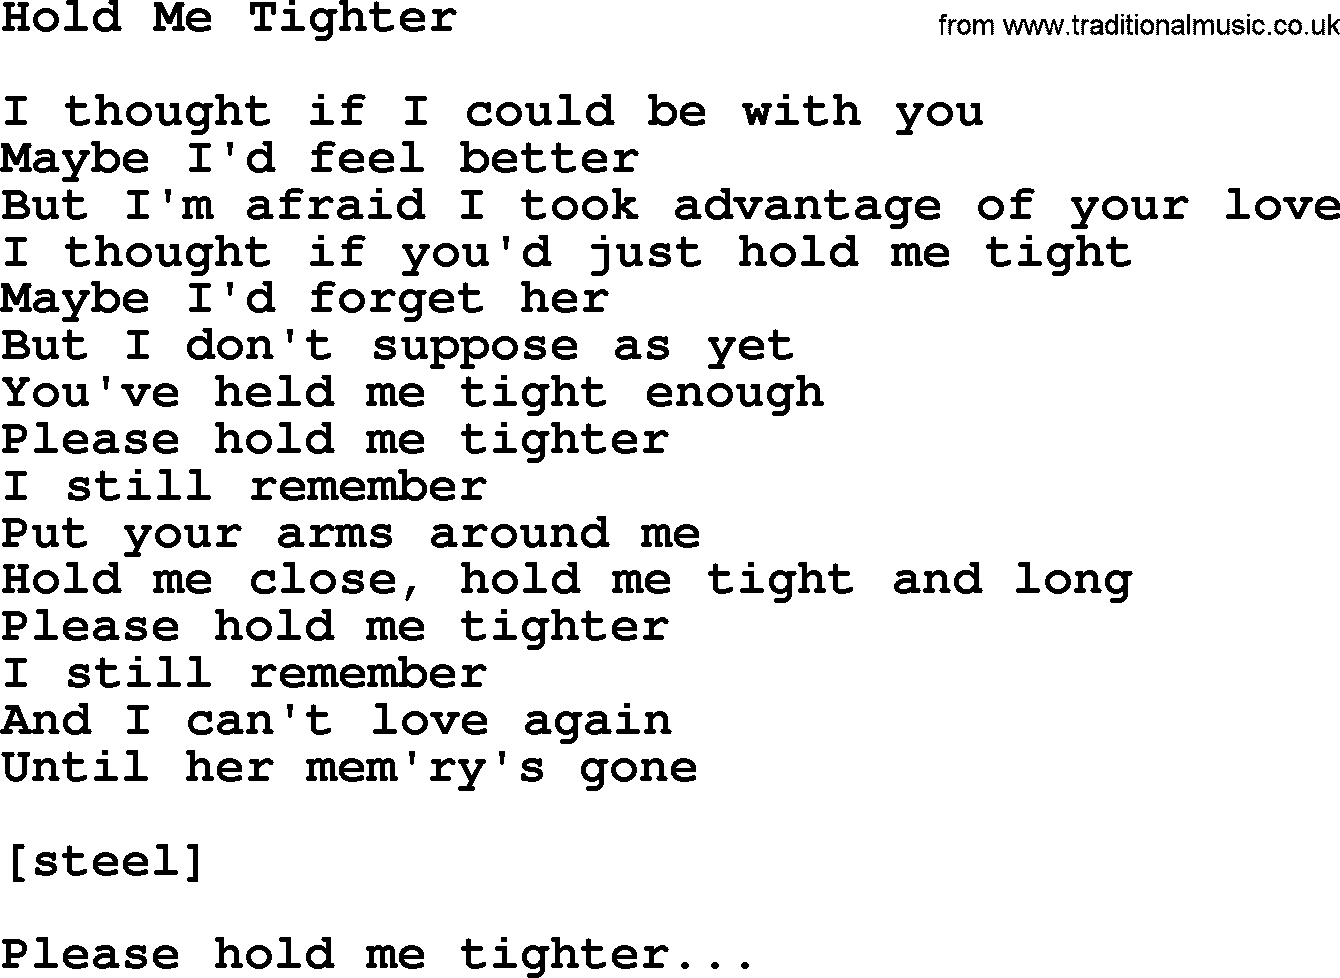 Willie Nelson song: Hold Me Tighter lyrics